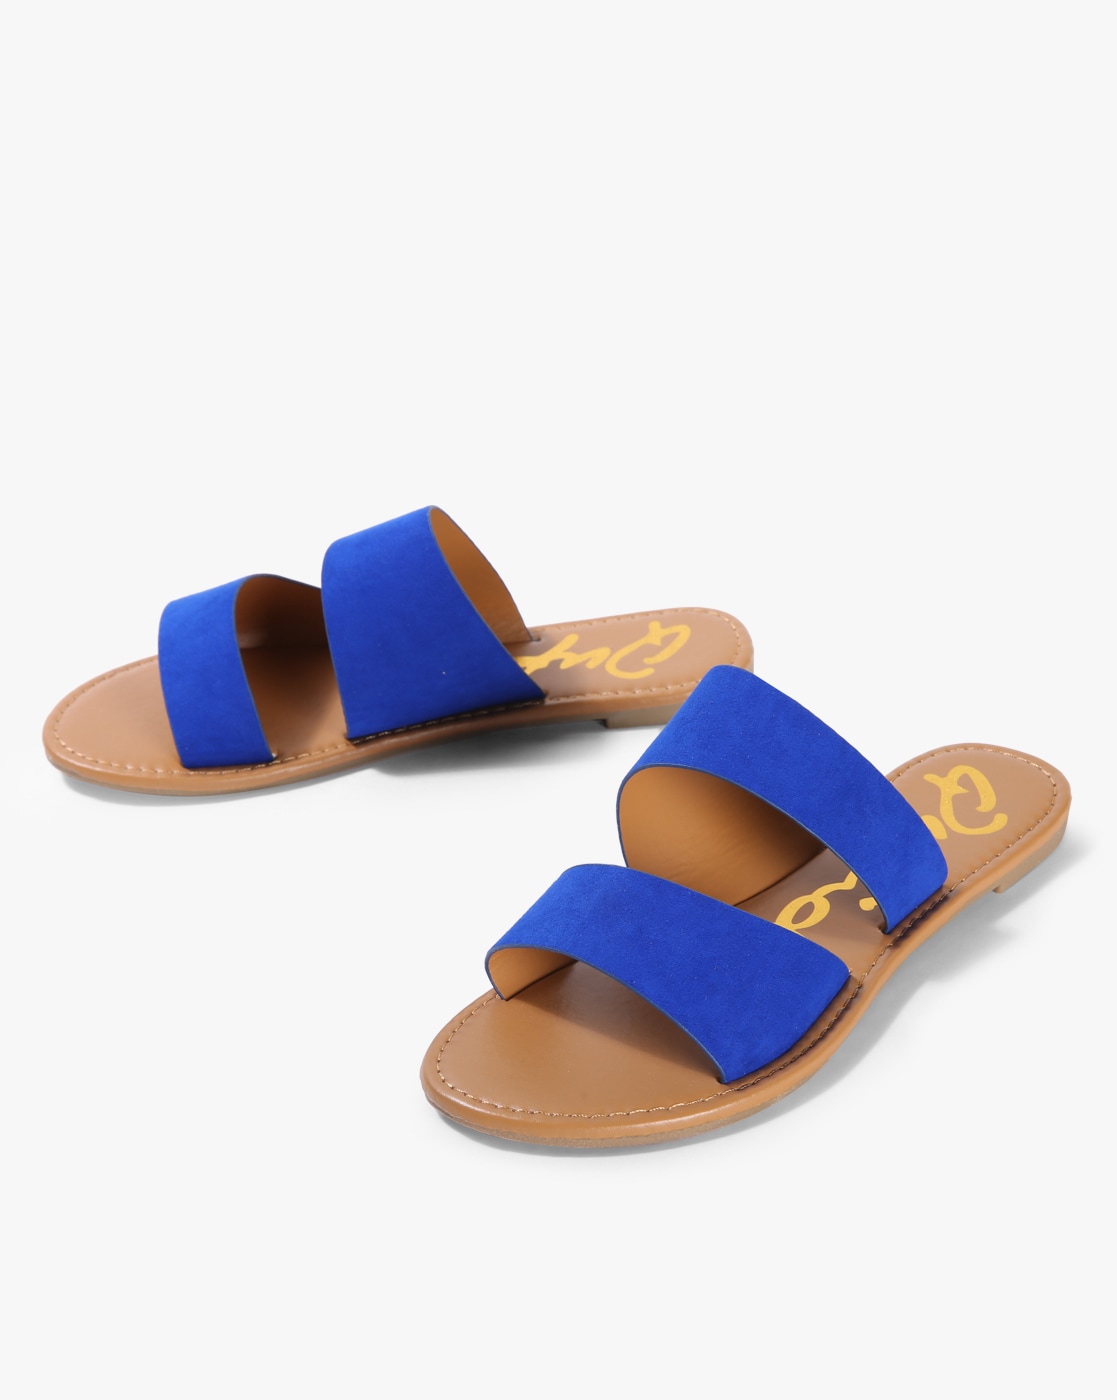 royal blue sandals